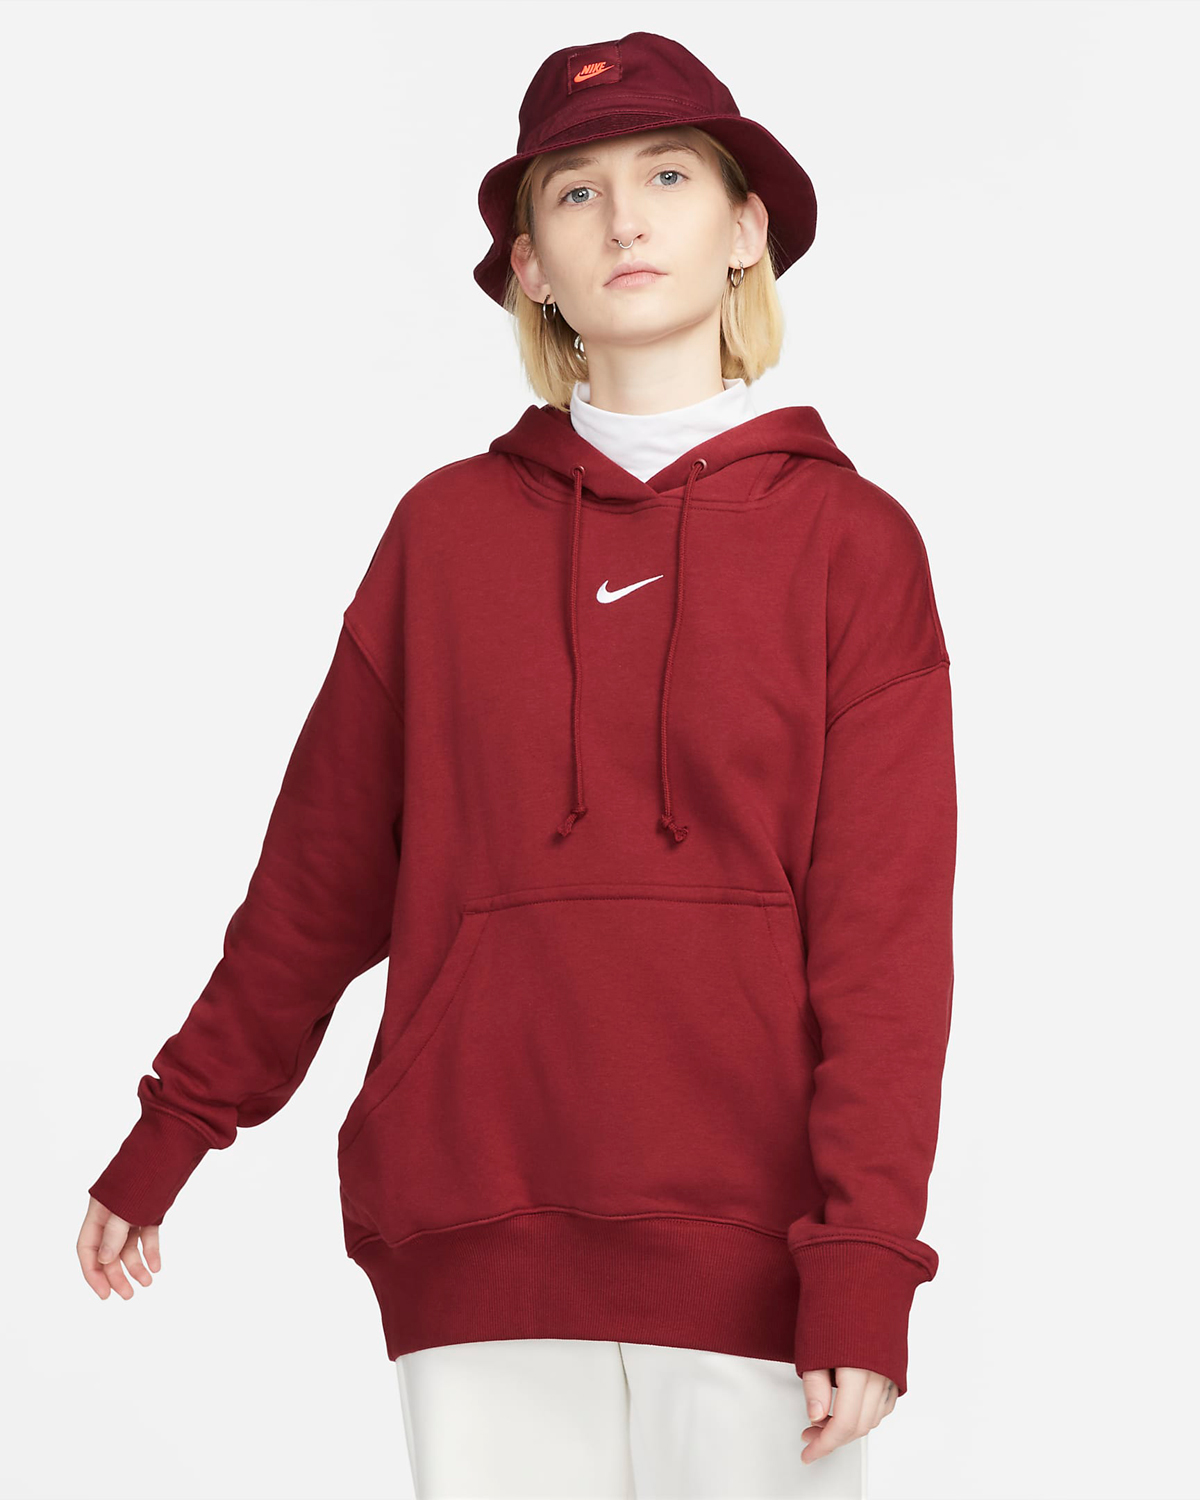 Nike-Sportswear-Womens-Phoenix-Hoodie-Team-Red